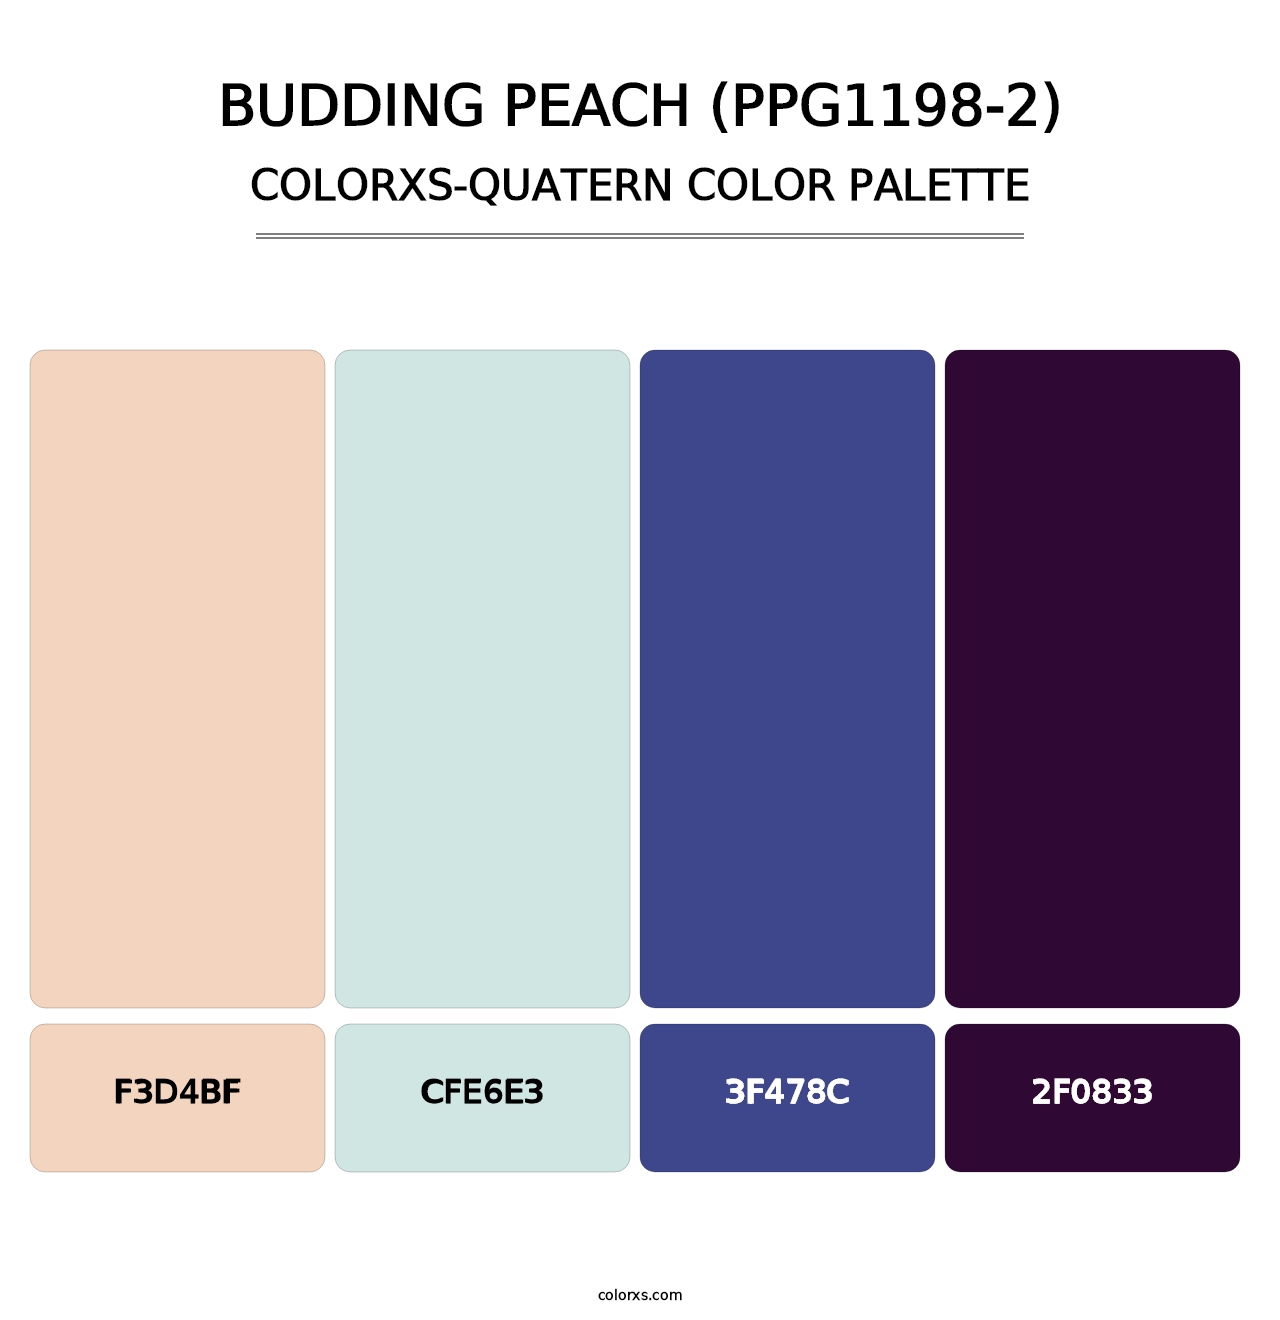 Budding Peach (PPG1198-2) - Colorxs Quatern Palette